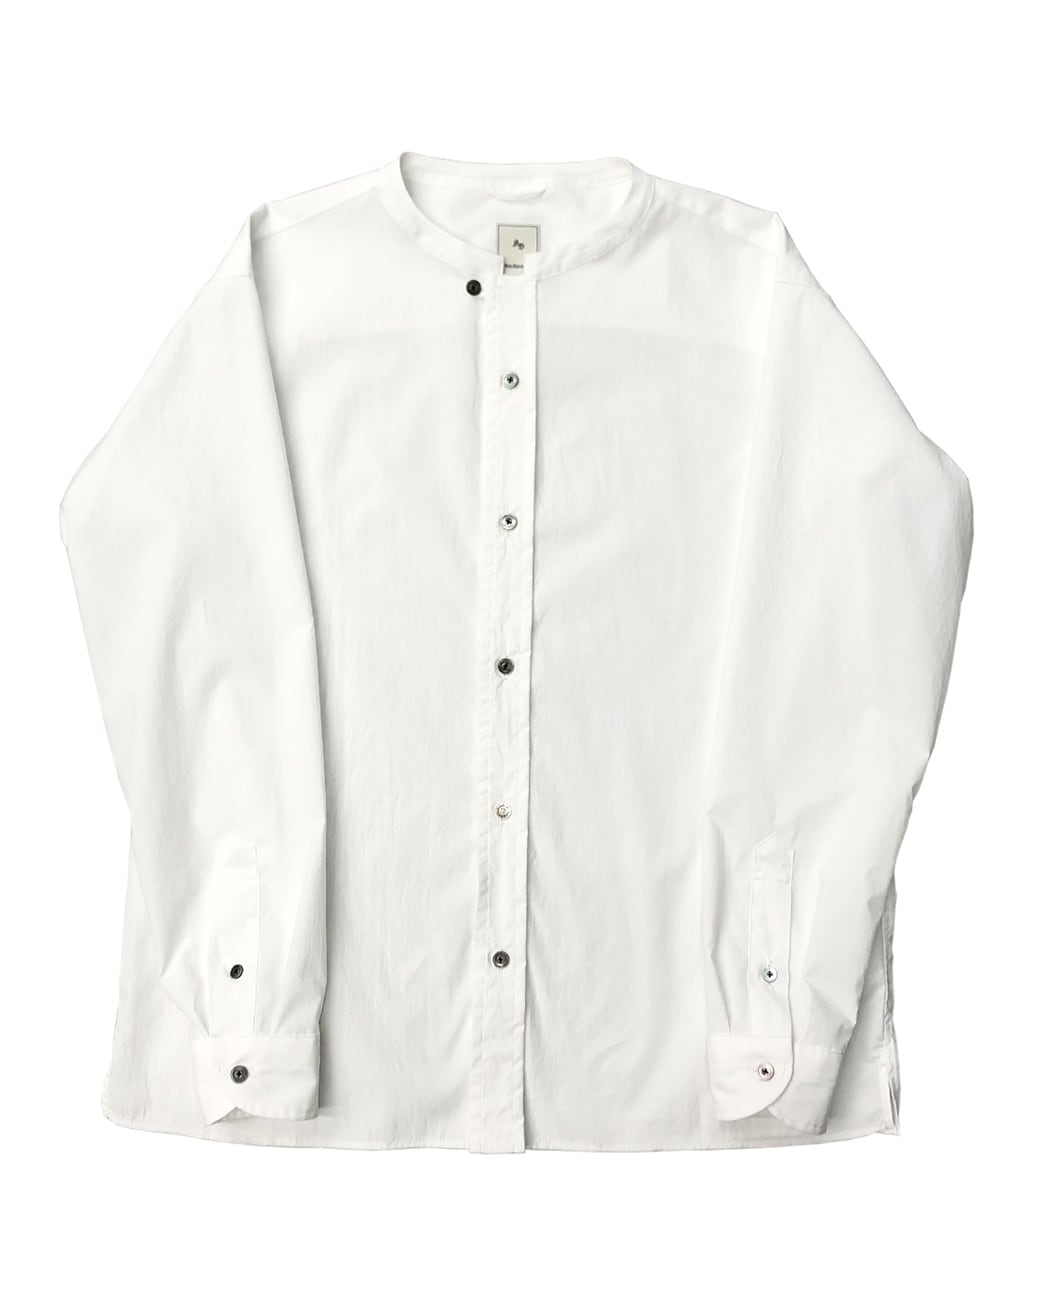 PE BAND COLLAR SHIRT / PEバンドカラーシャツ (WHITE)